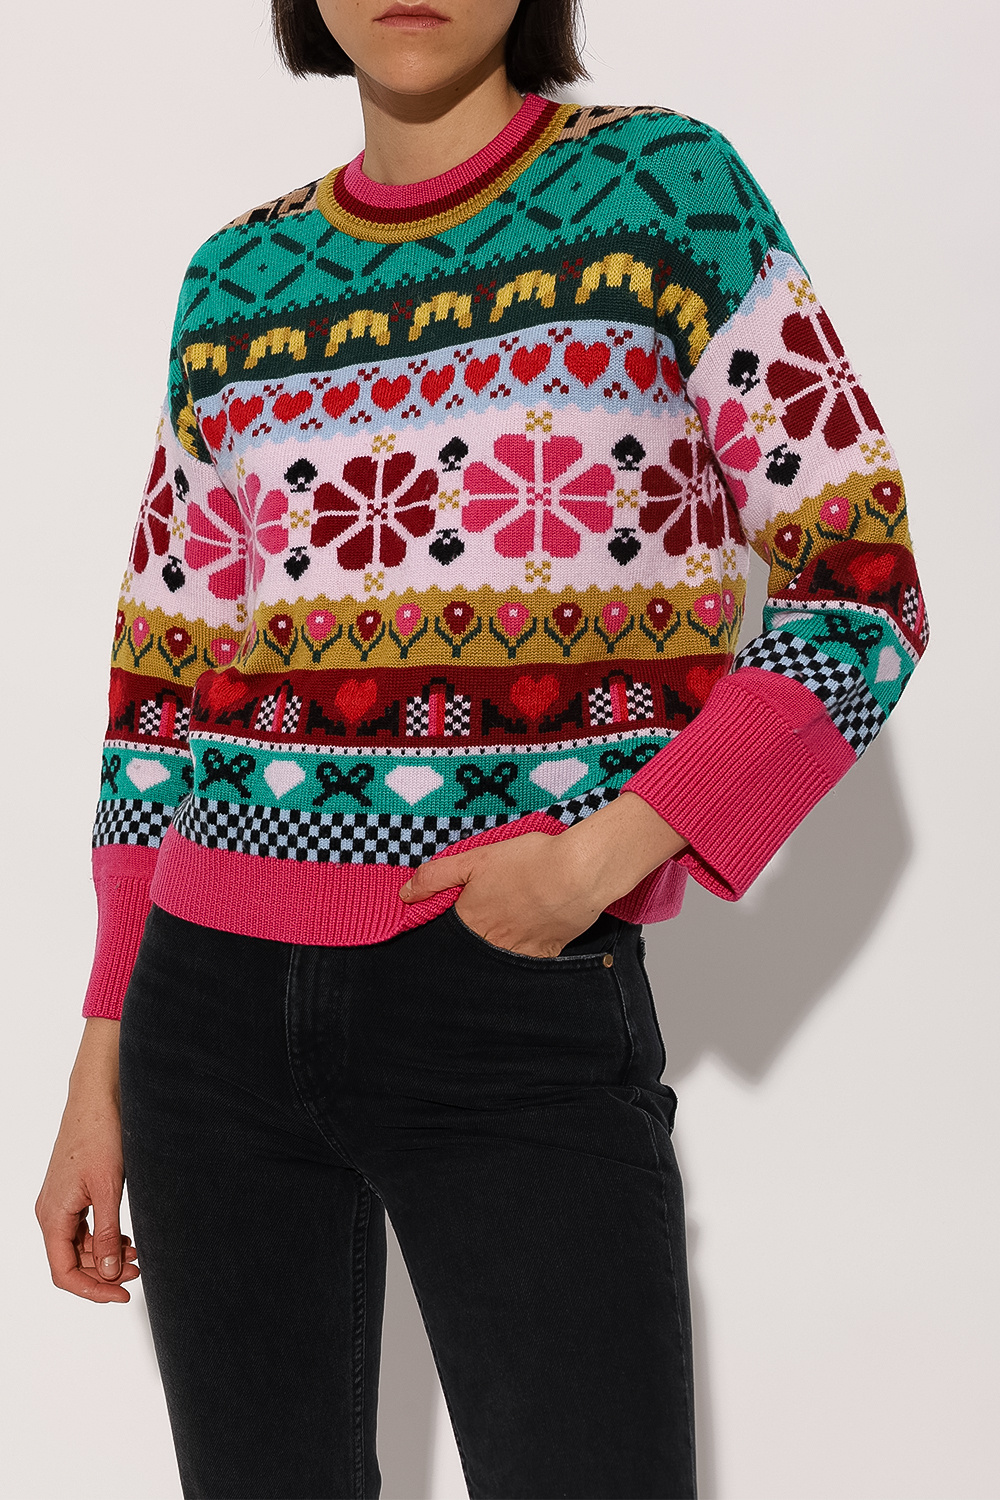 Kate Spade Patterned sweater | Women's Clothing | Vitkac